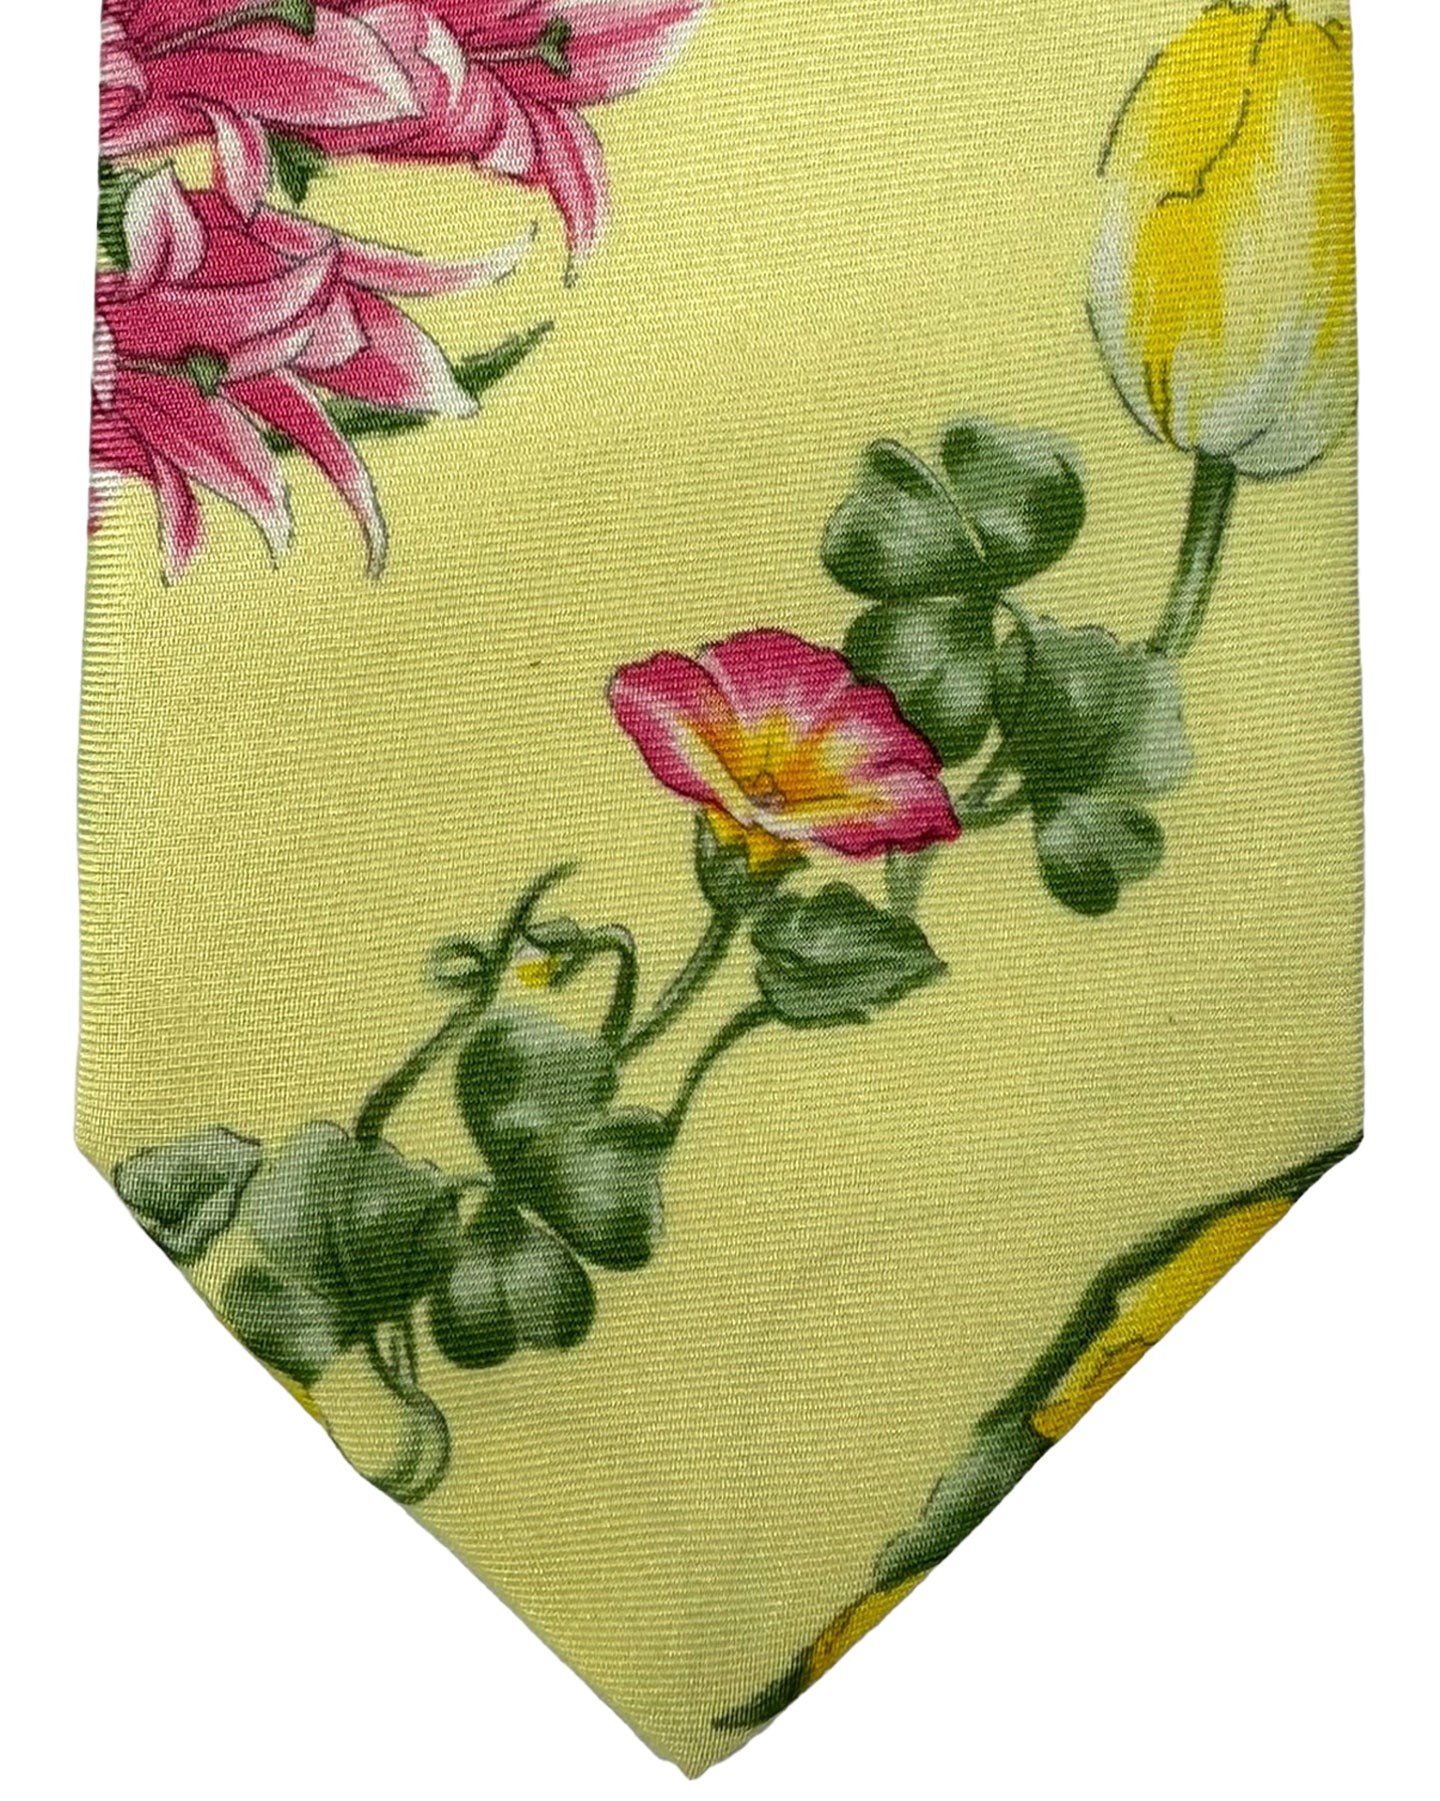 Versace Silk Tie Yellow Pink Floral Design